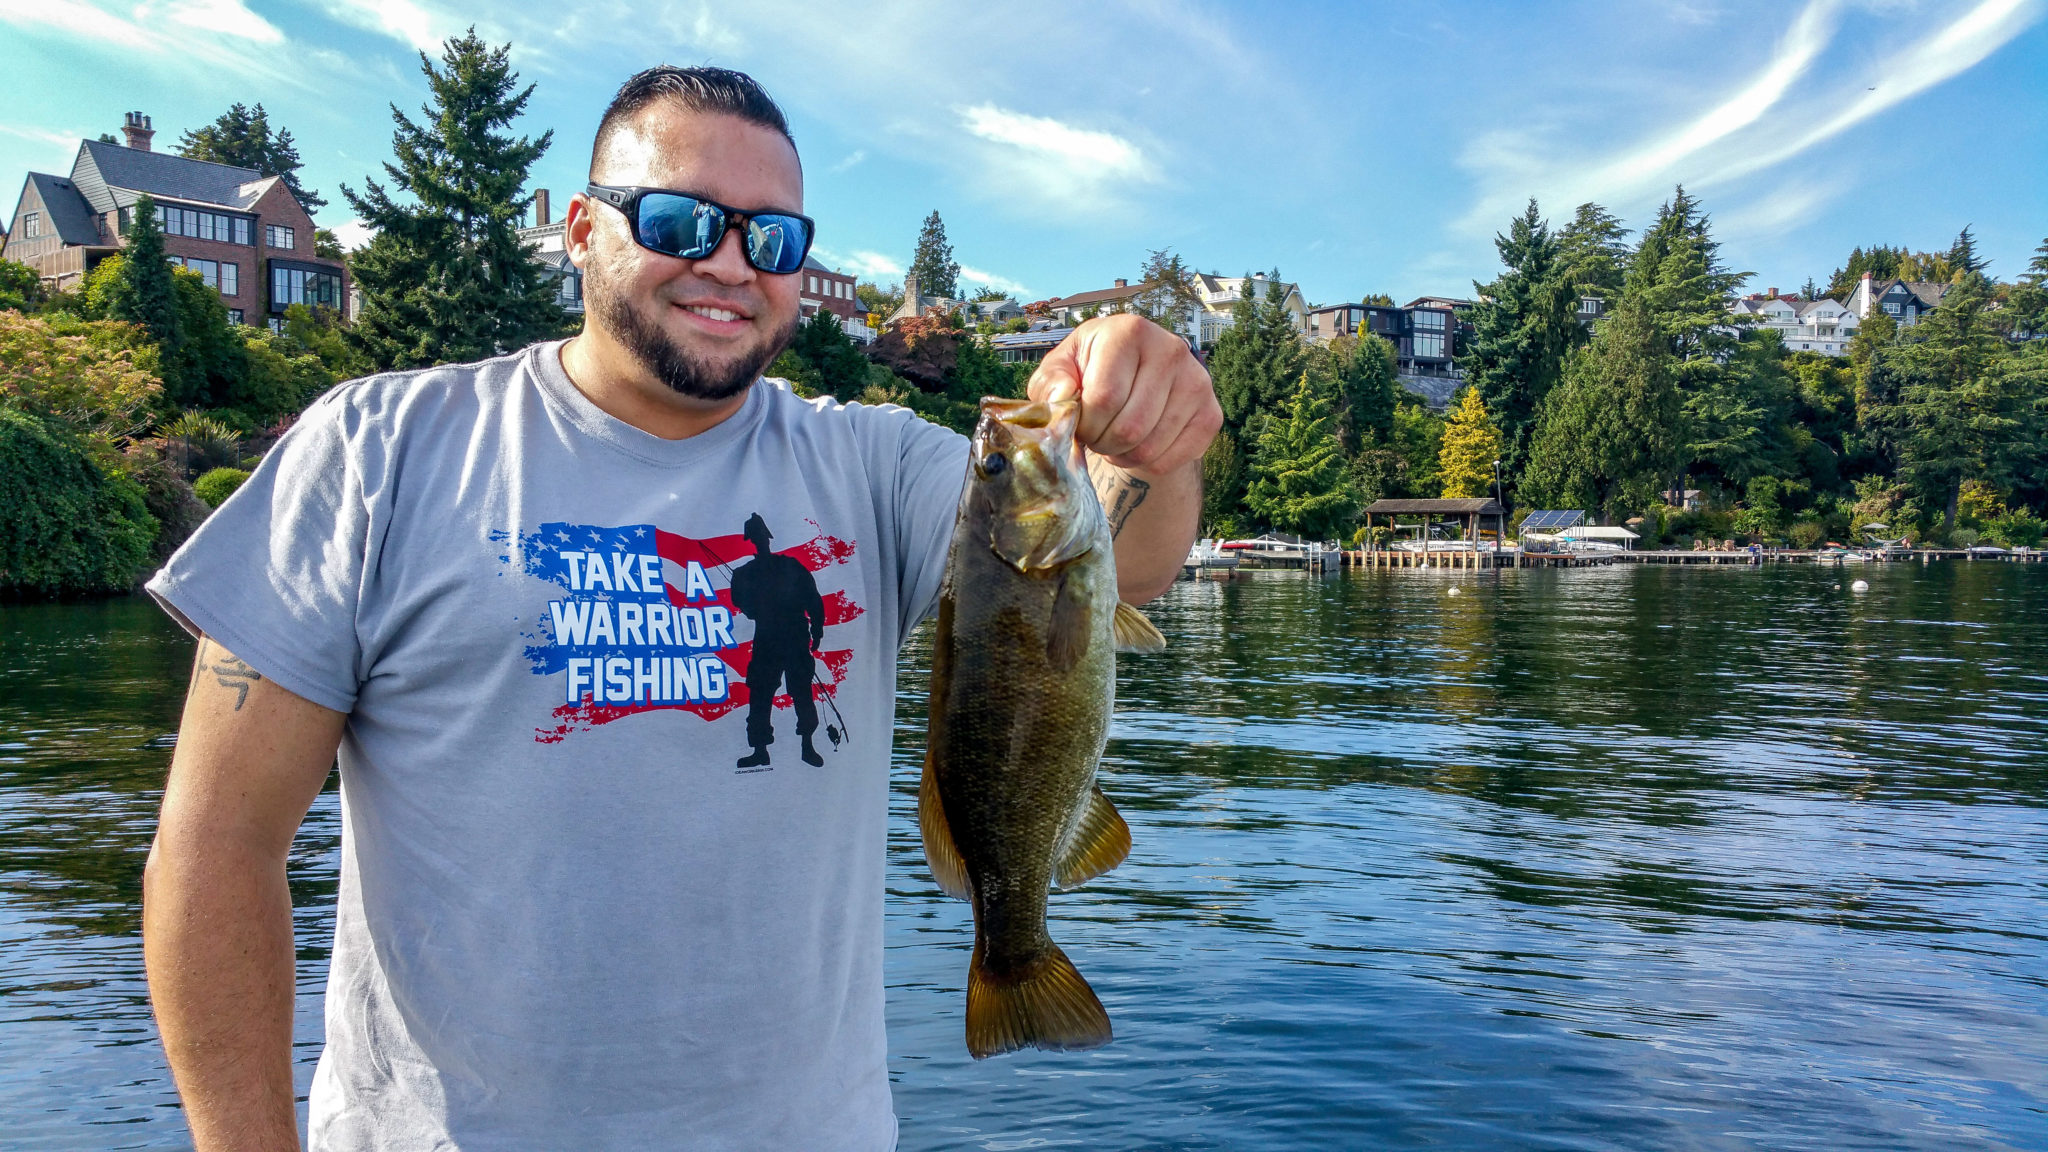 Take a Warrior Fishing – Lake Washington